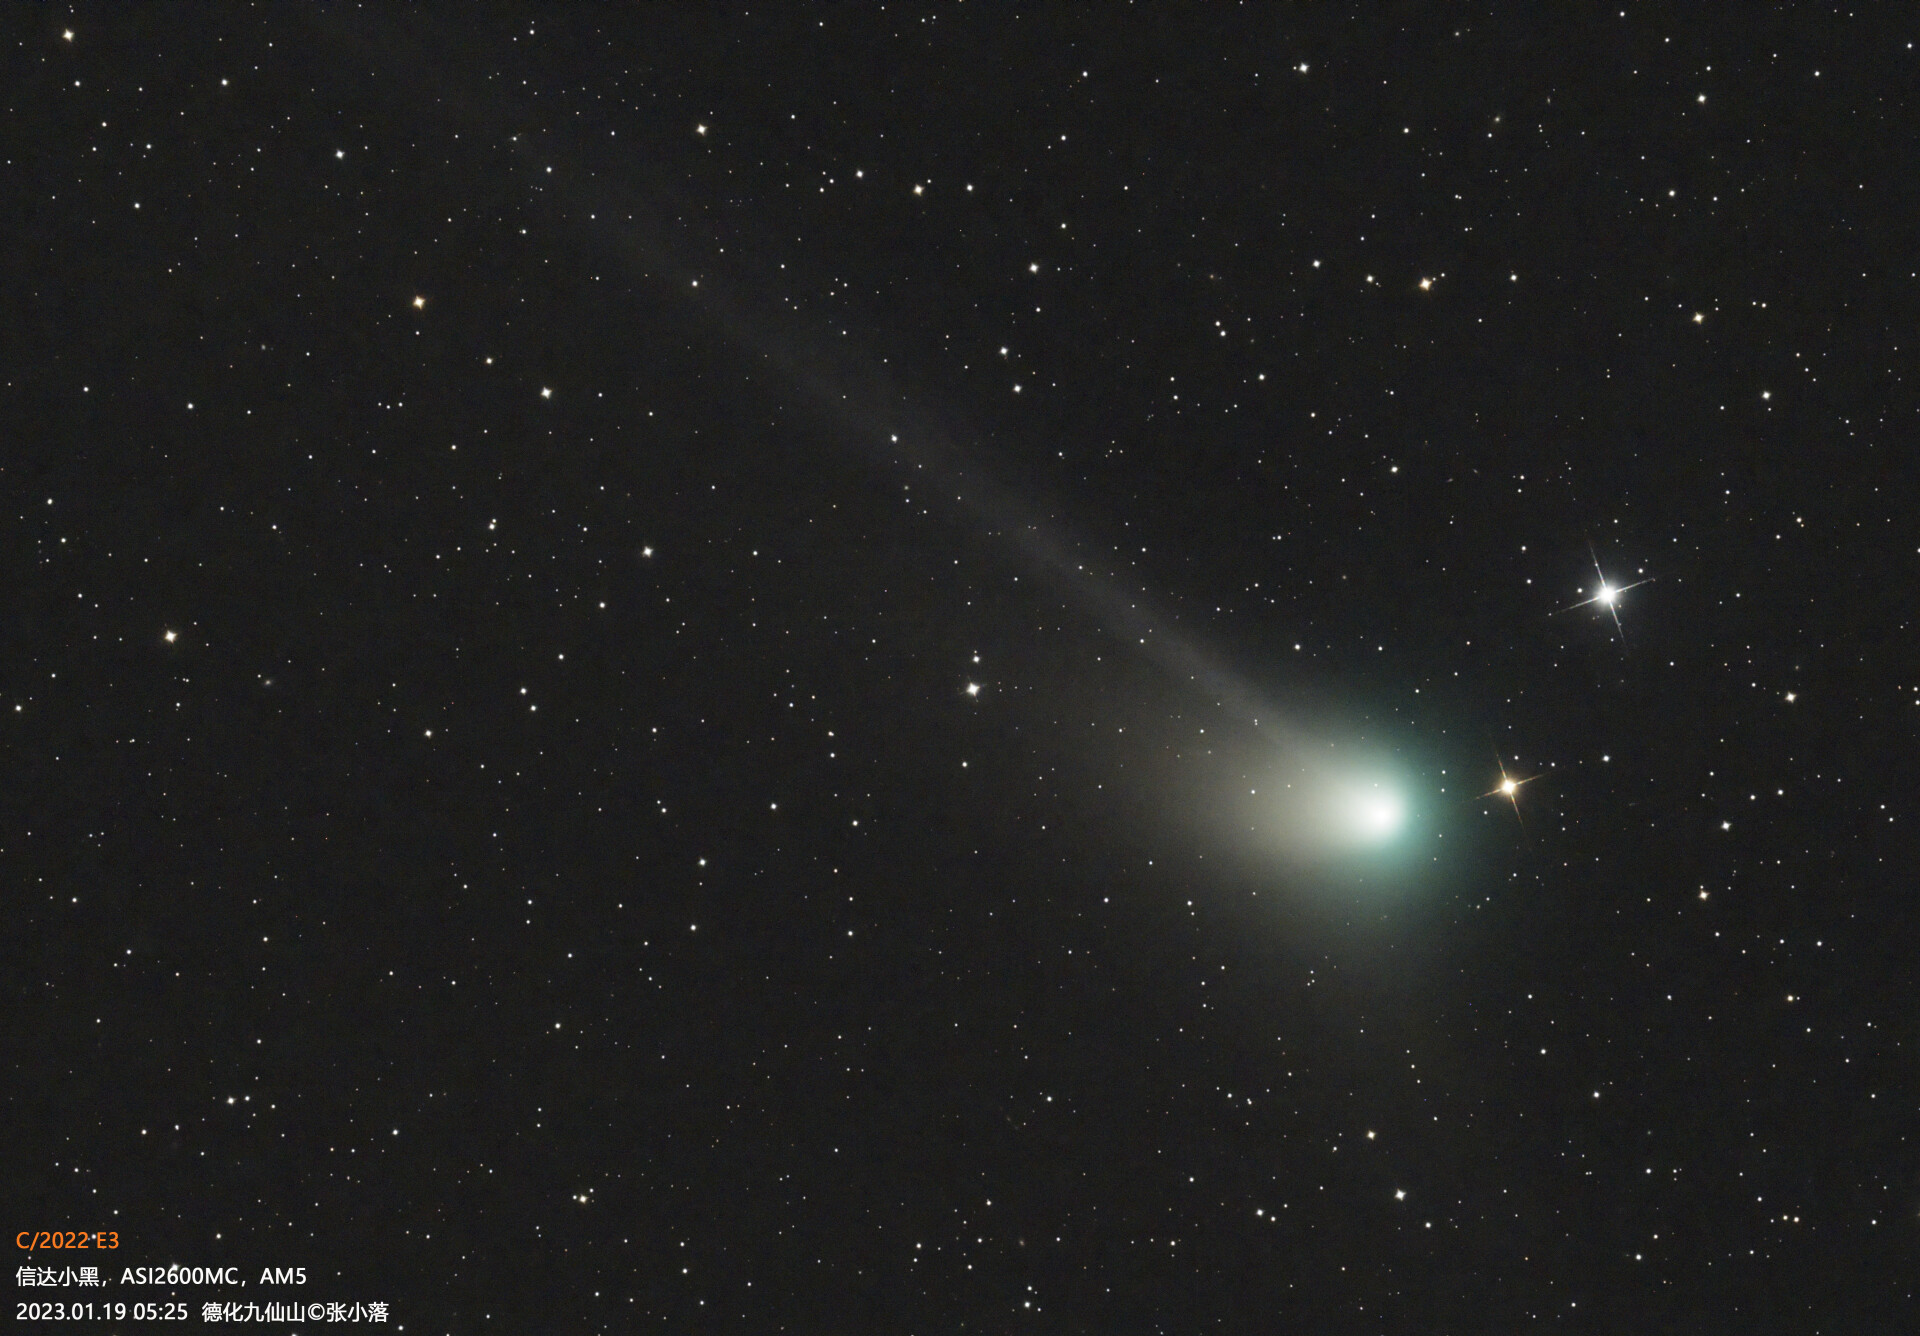 C/2022 E3彗星